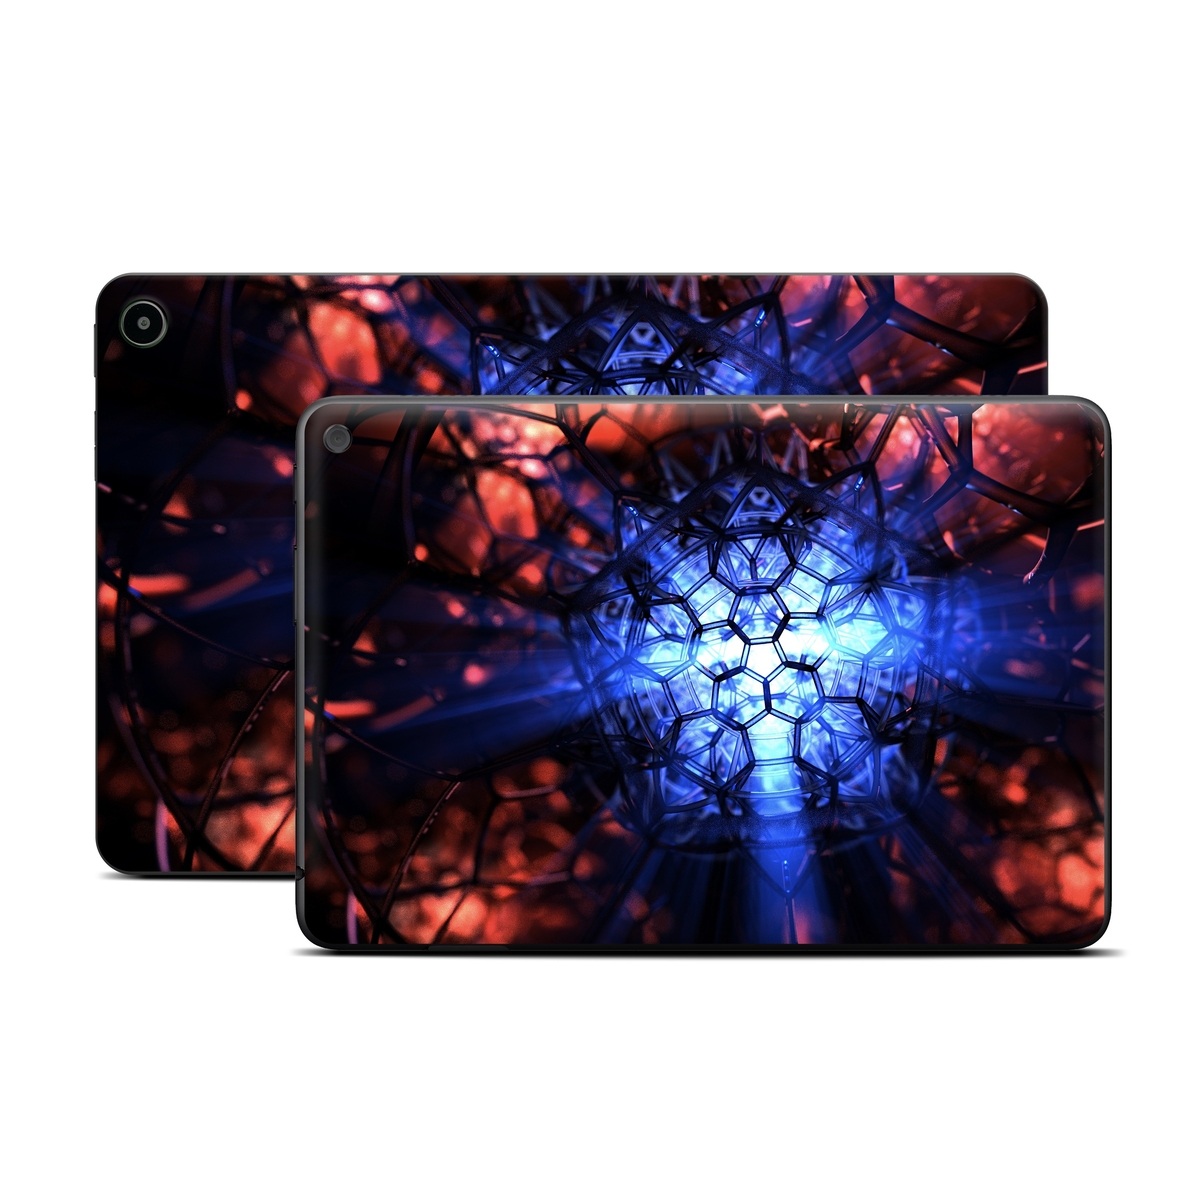 Amazon Fire Tablet Series Skin Skin design of Blue, Fractal art, Red, Light, Pattern, Lighting, Art, Kaleidoscope, Design, Psychedelic art, with black, blue, red colors